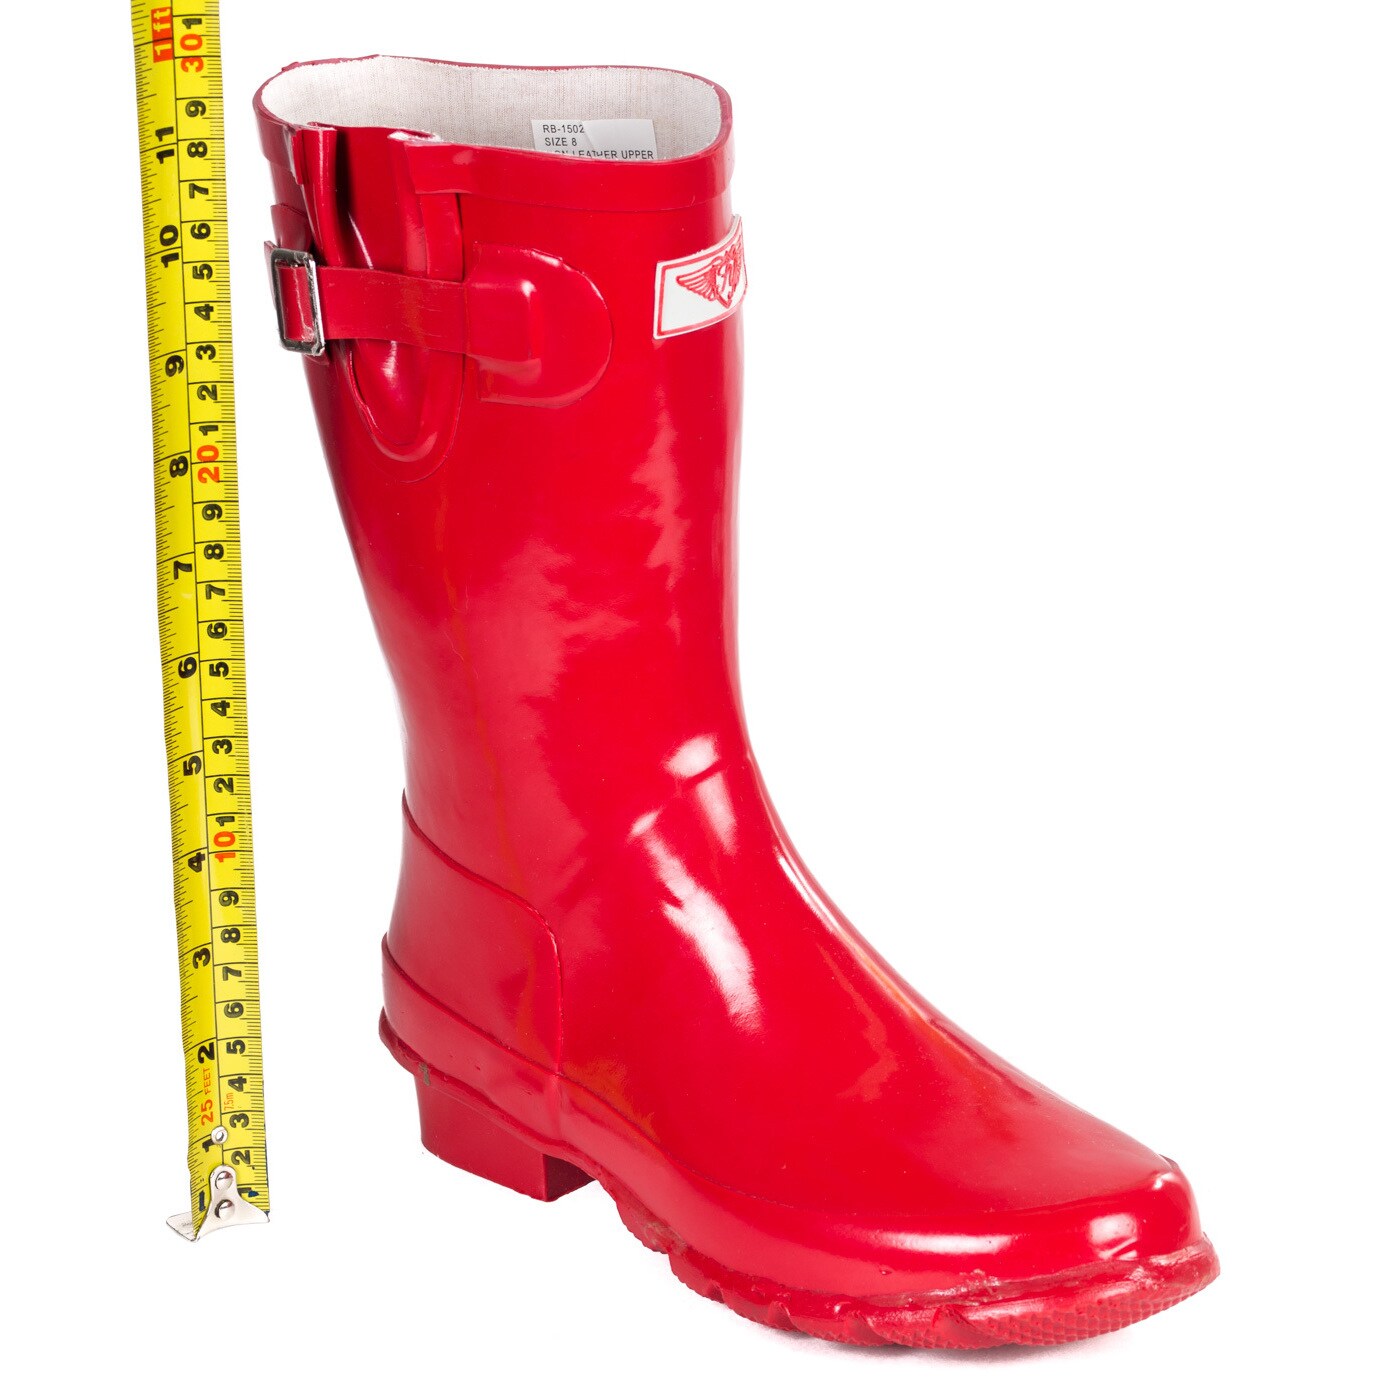 red wide calf rain boots